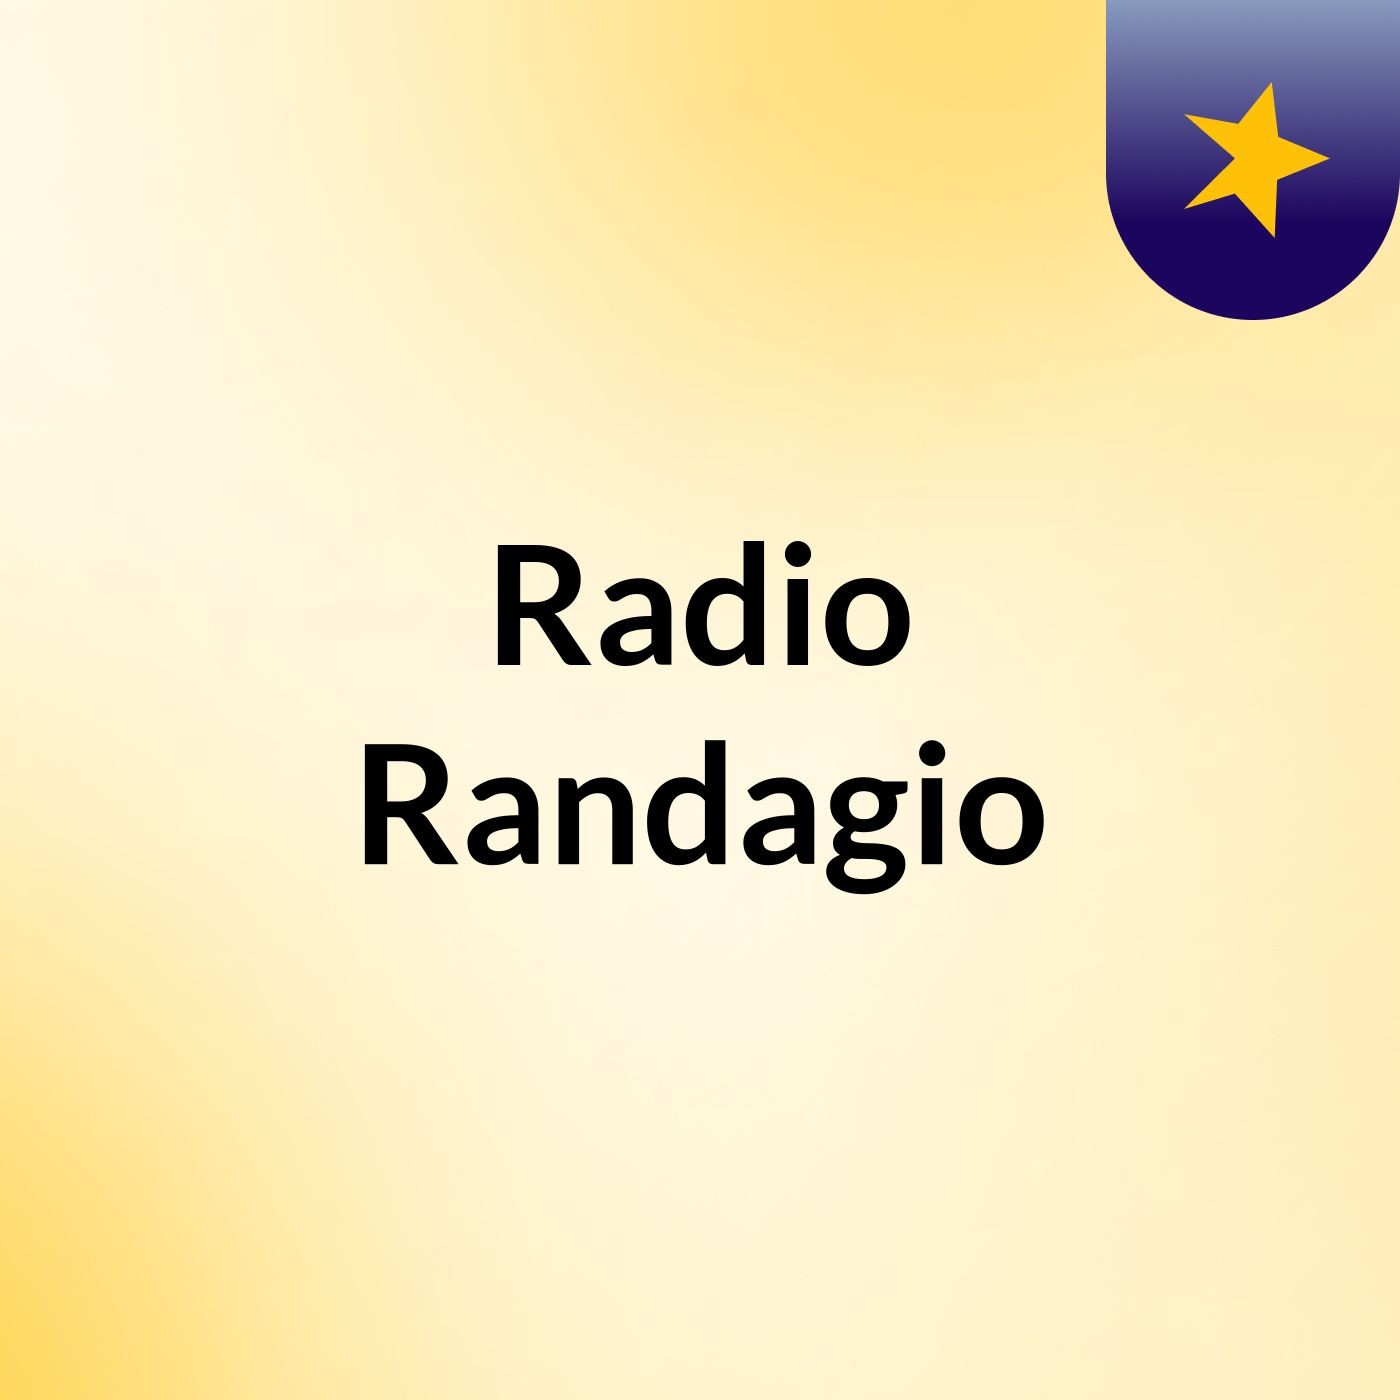 Radio Randagio